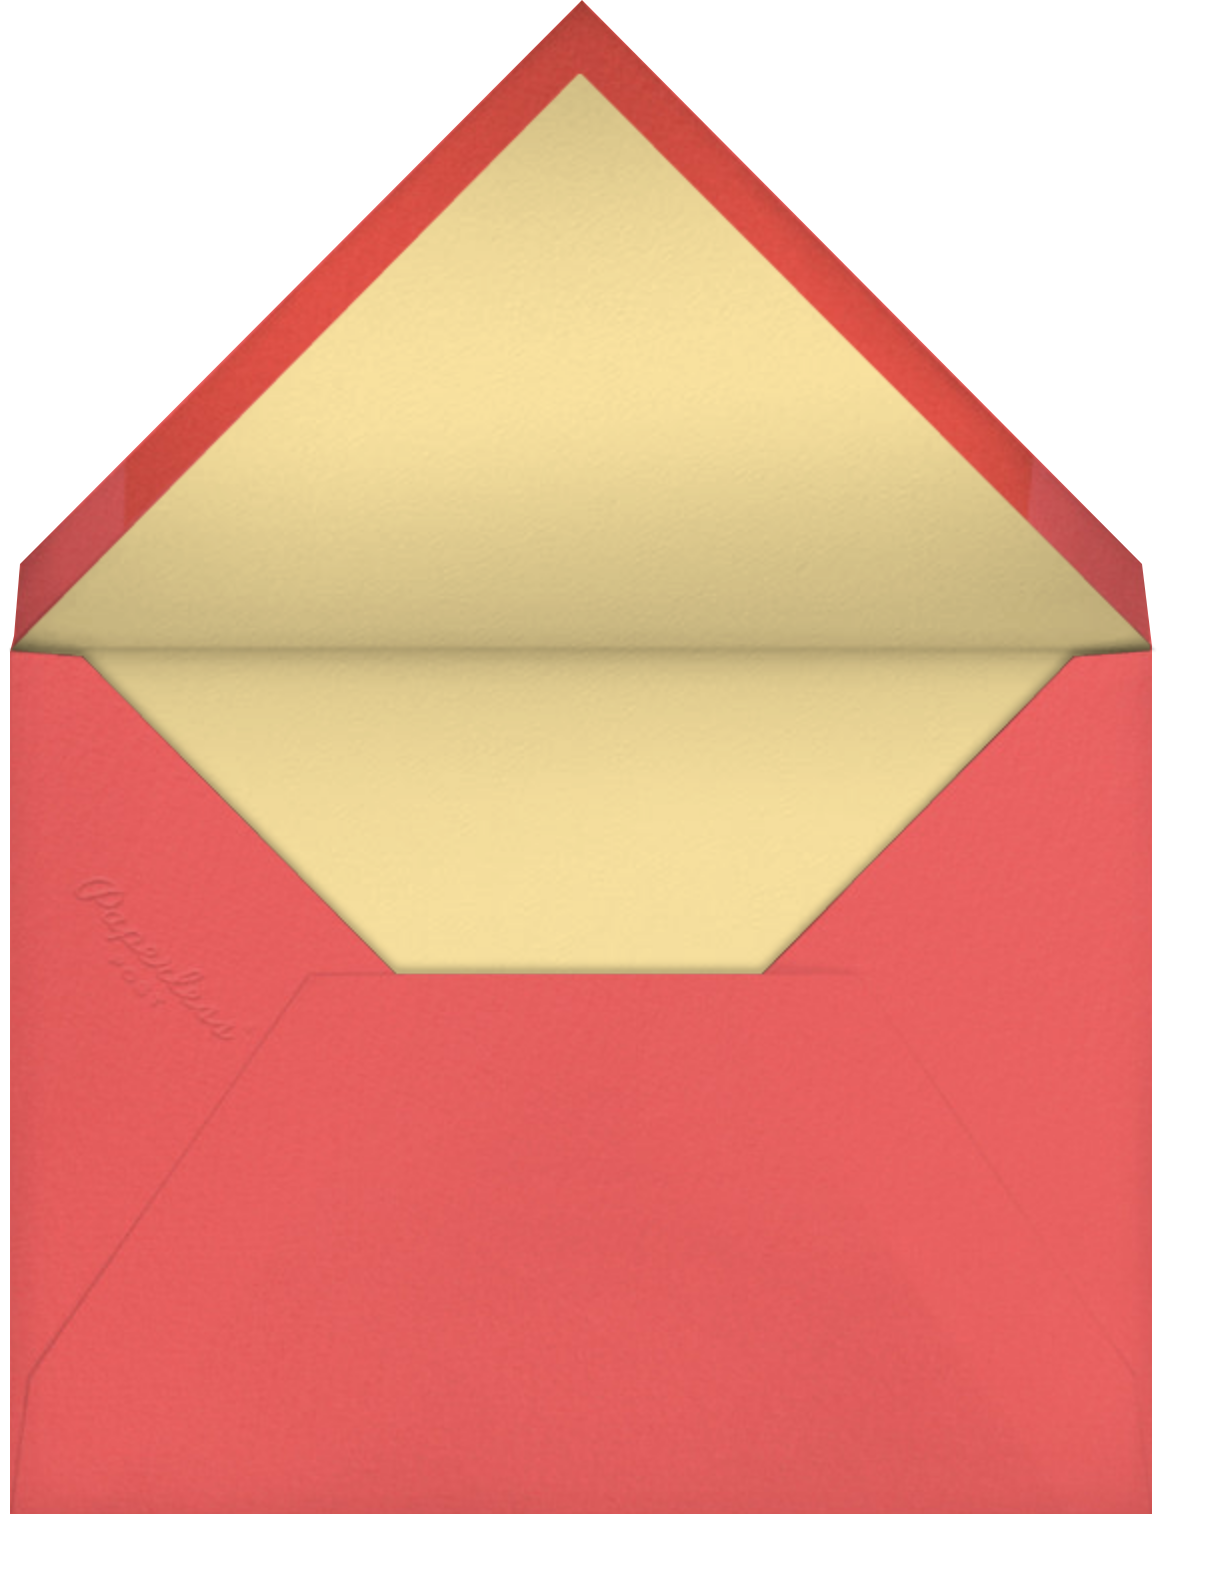 Birthday Bike (Blanca Gómez) - Medium - Red Cap Cards - Envelope